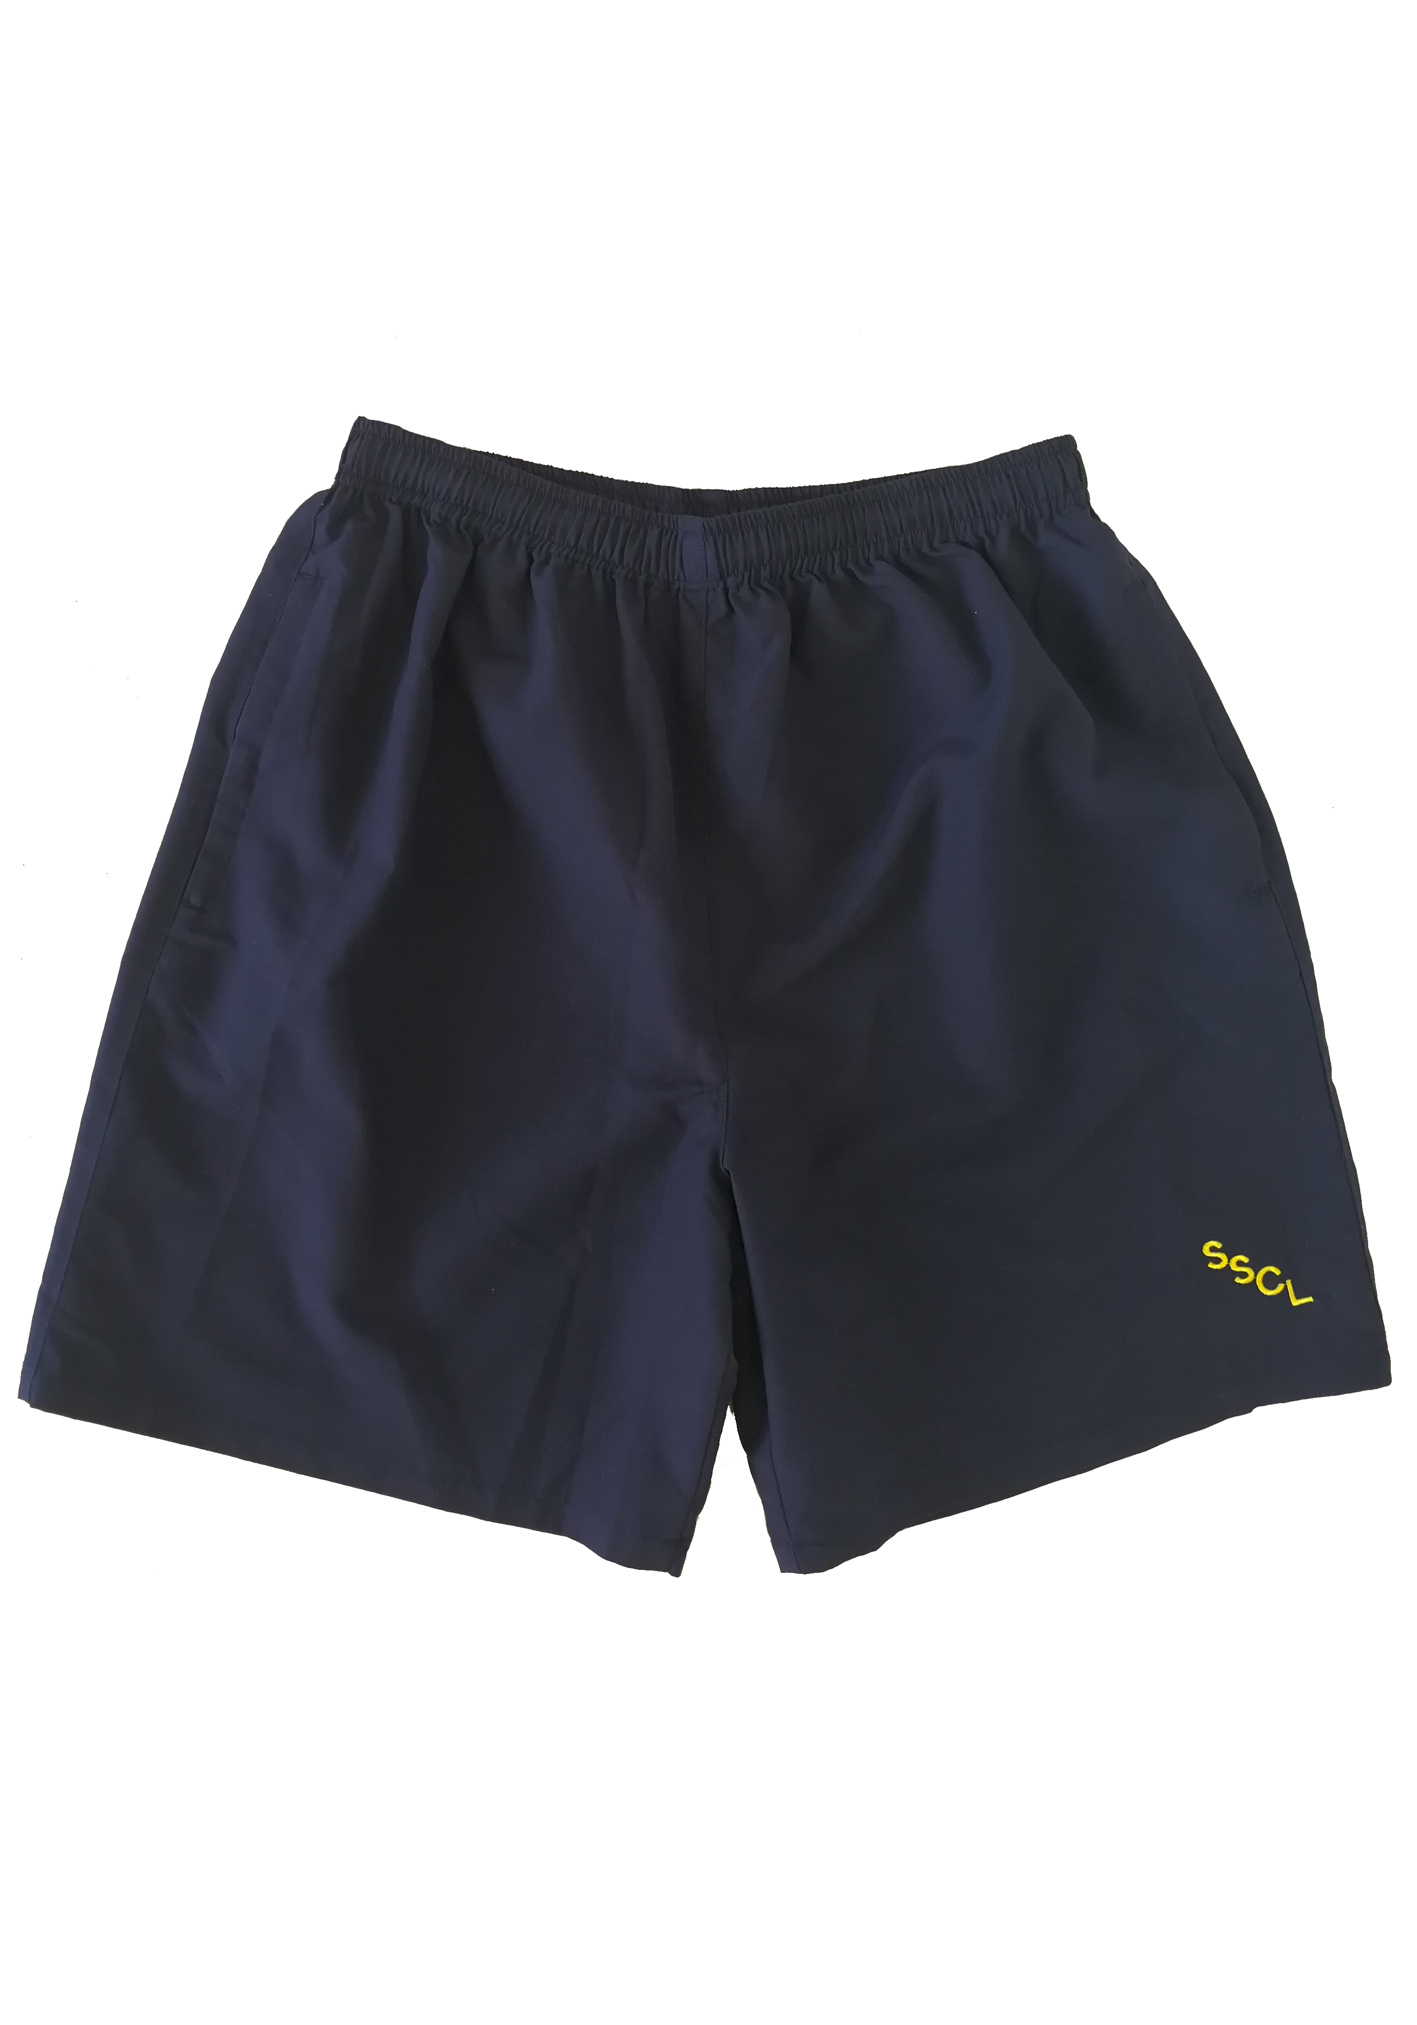 Ssc Leichhardt Navy Unisex Microfibre Sports Shorts | Shop at Pickles ...